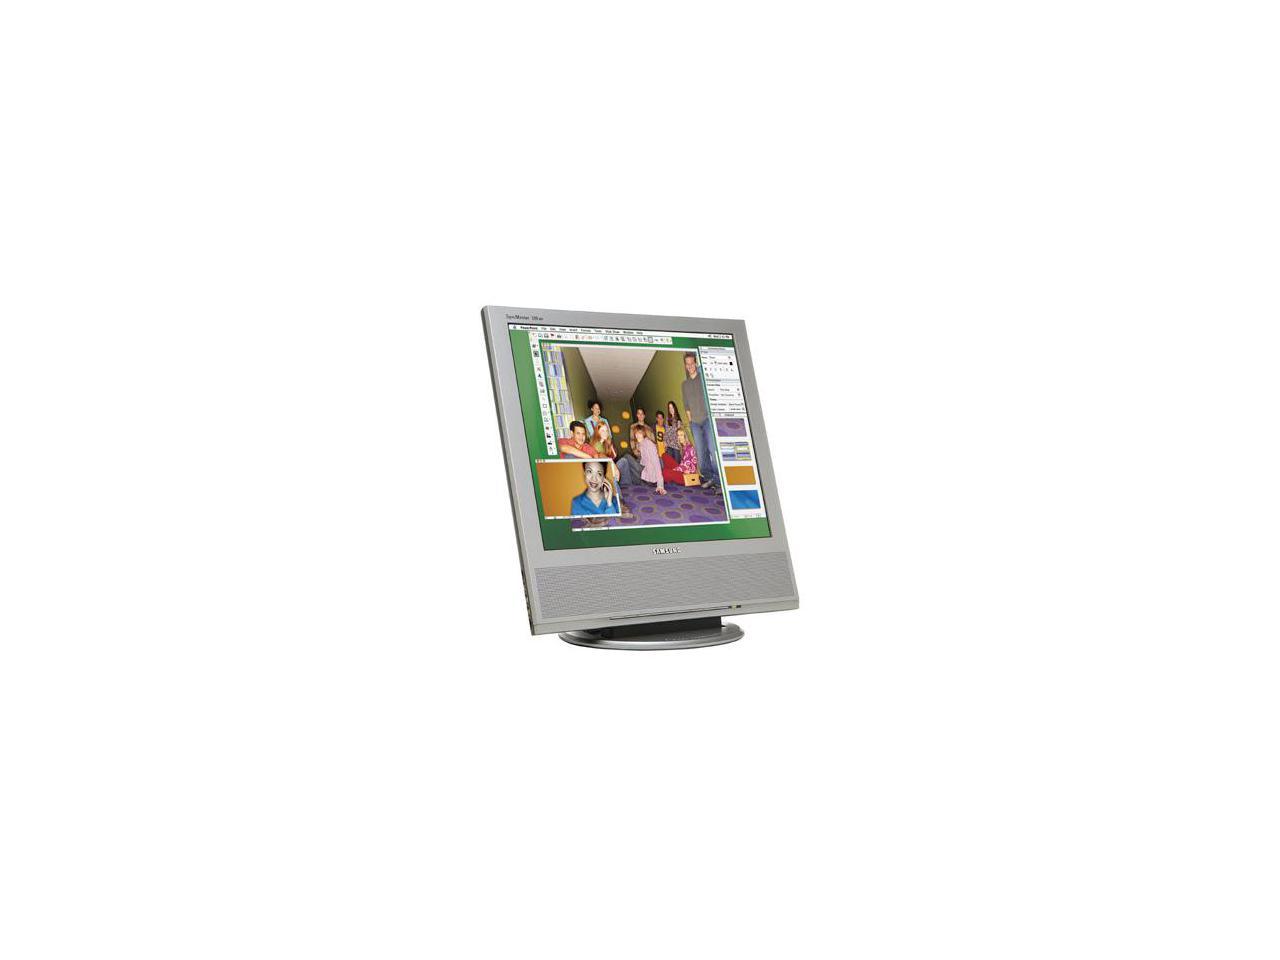 Samsung 510MP Silver 15" 25ms LCD Monitor w/ TV Tuner 250 cd/m2 350:1